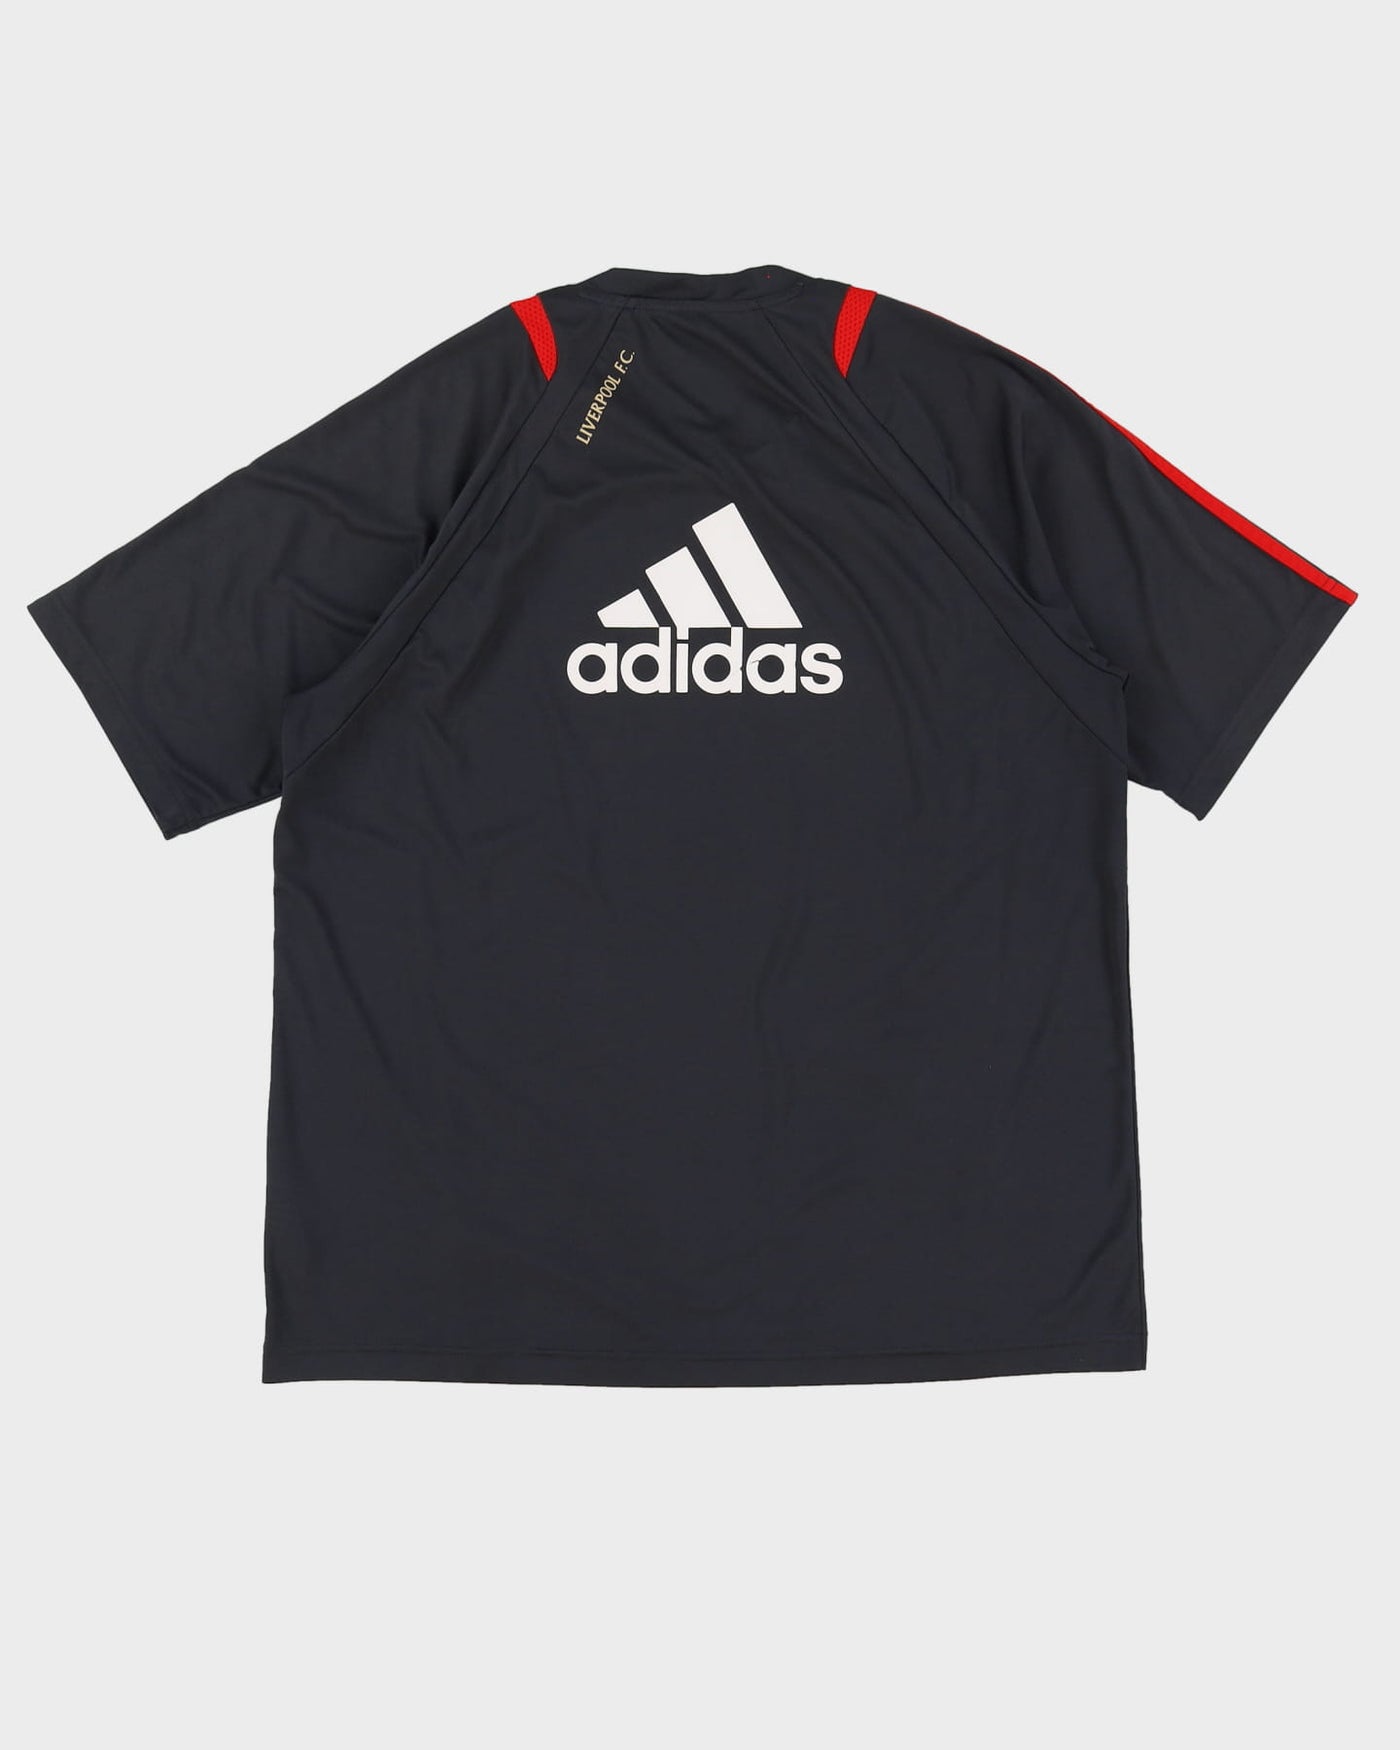 Liverpool FC Adidas Grey Football Training Shirt / Jersey - XL